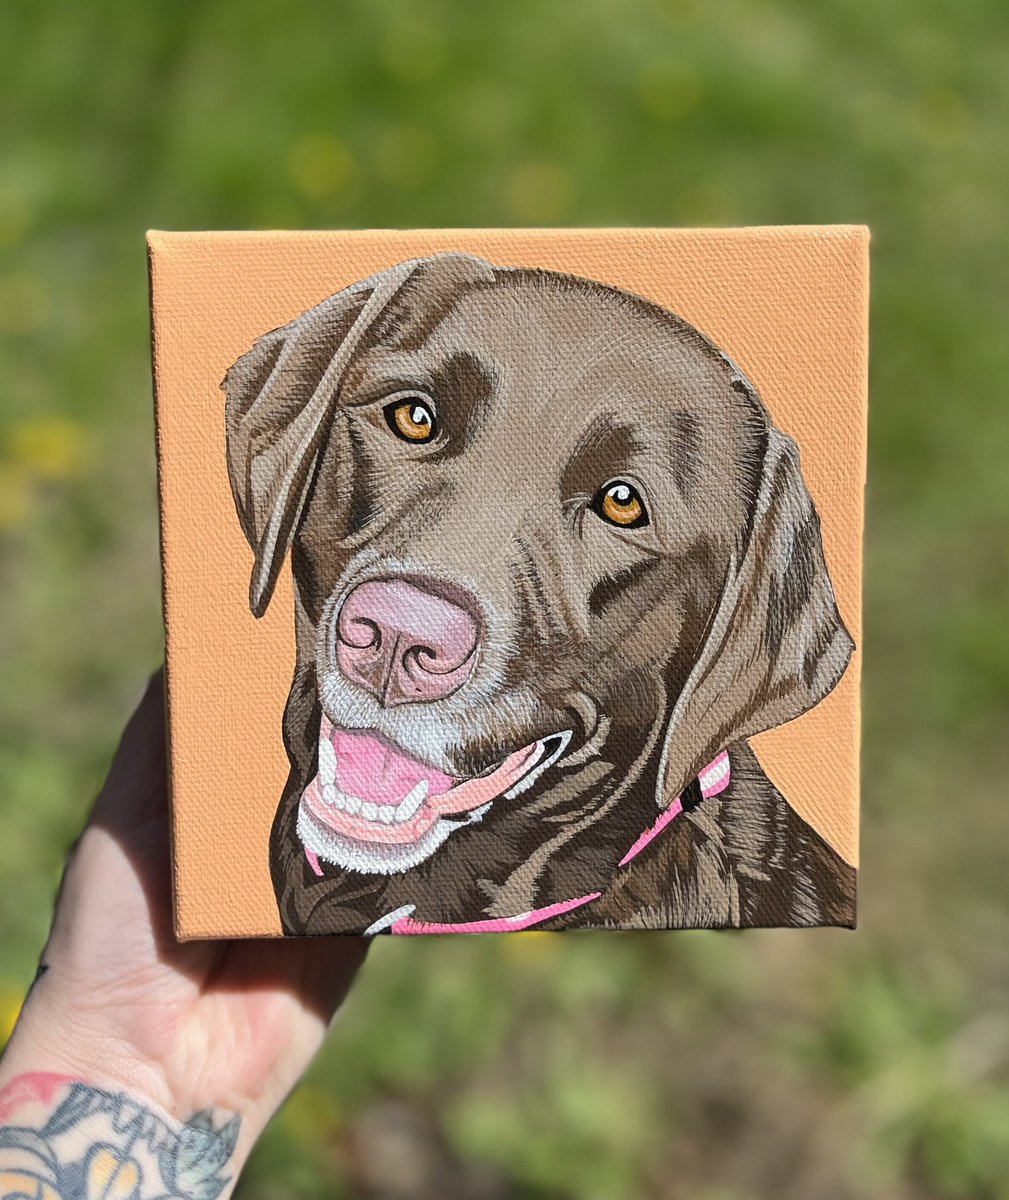 New pet portrait 🧡

Books open for May🫶🏻

#artbyjangles #art #artist #artoftheday #drawing #paint #painting #acrylicpainting #dog #dogs #chocolatelab #lab #labrador #petportrait #portraitpainting